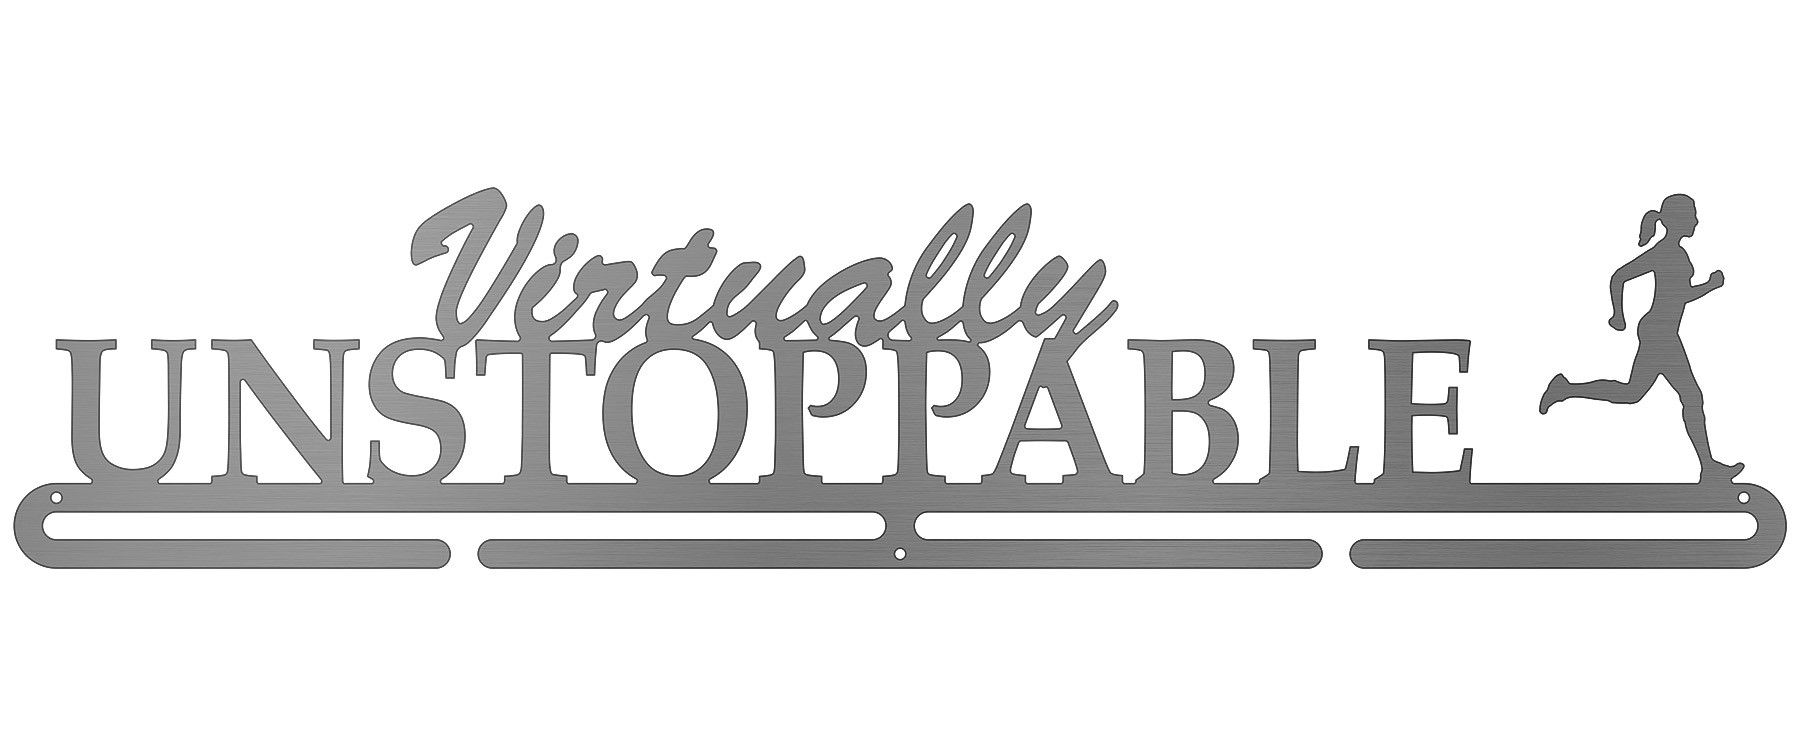 Virtually Unstoppable - Female